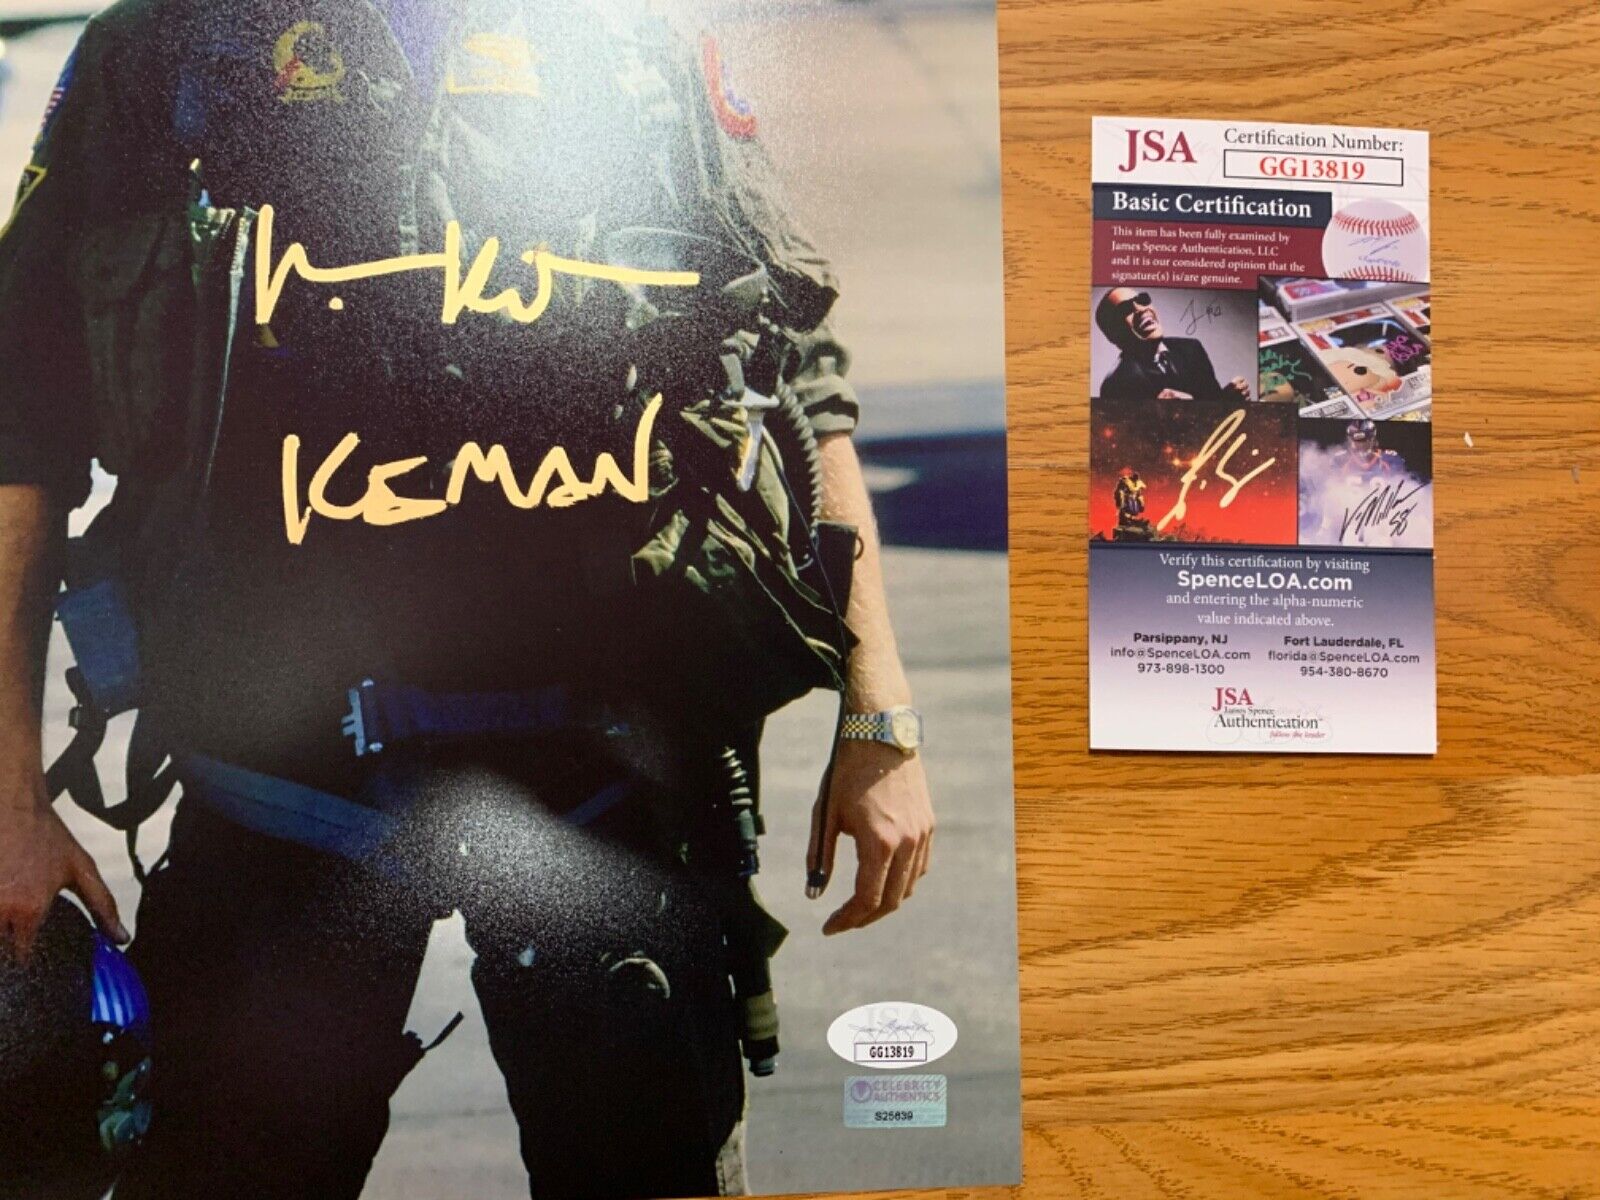 Val Kilmer Iceman From Top Gun Autographed 11x14 Photo JSA Celebrity C